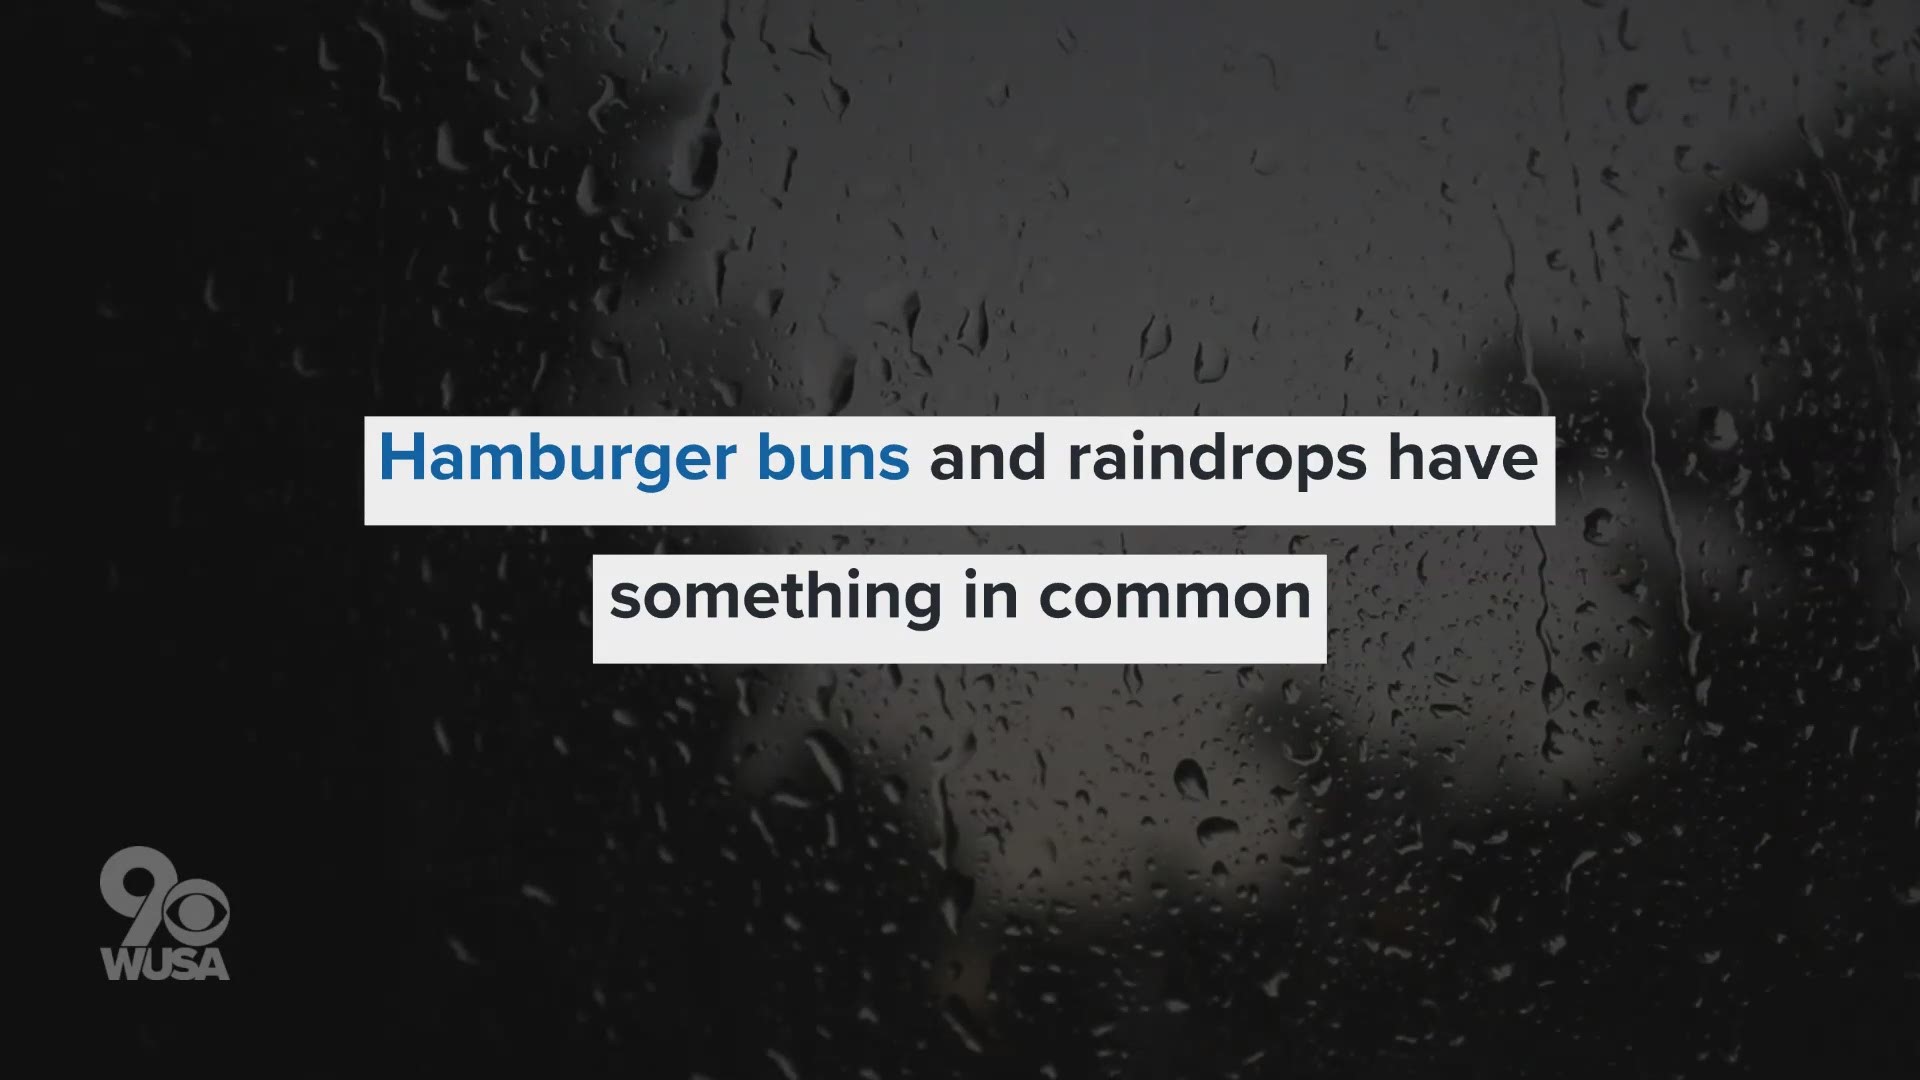 As raindrops fall they take on the shape of a hamburger bun.